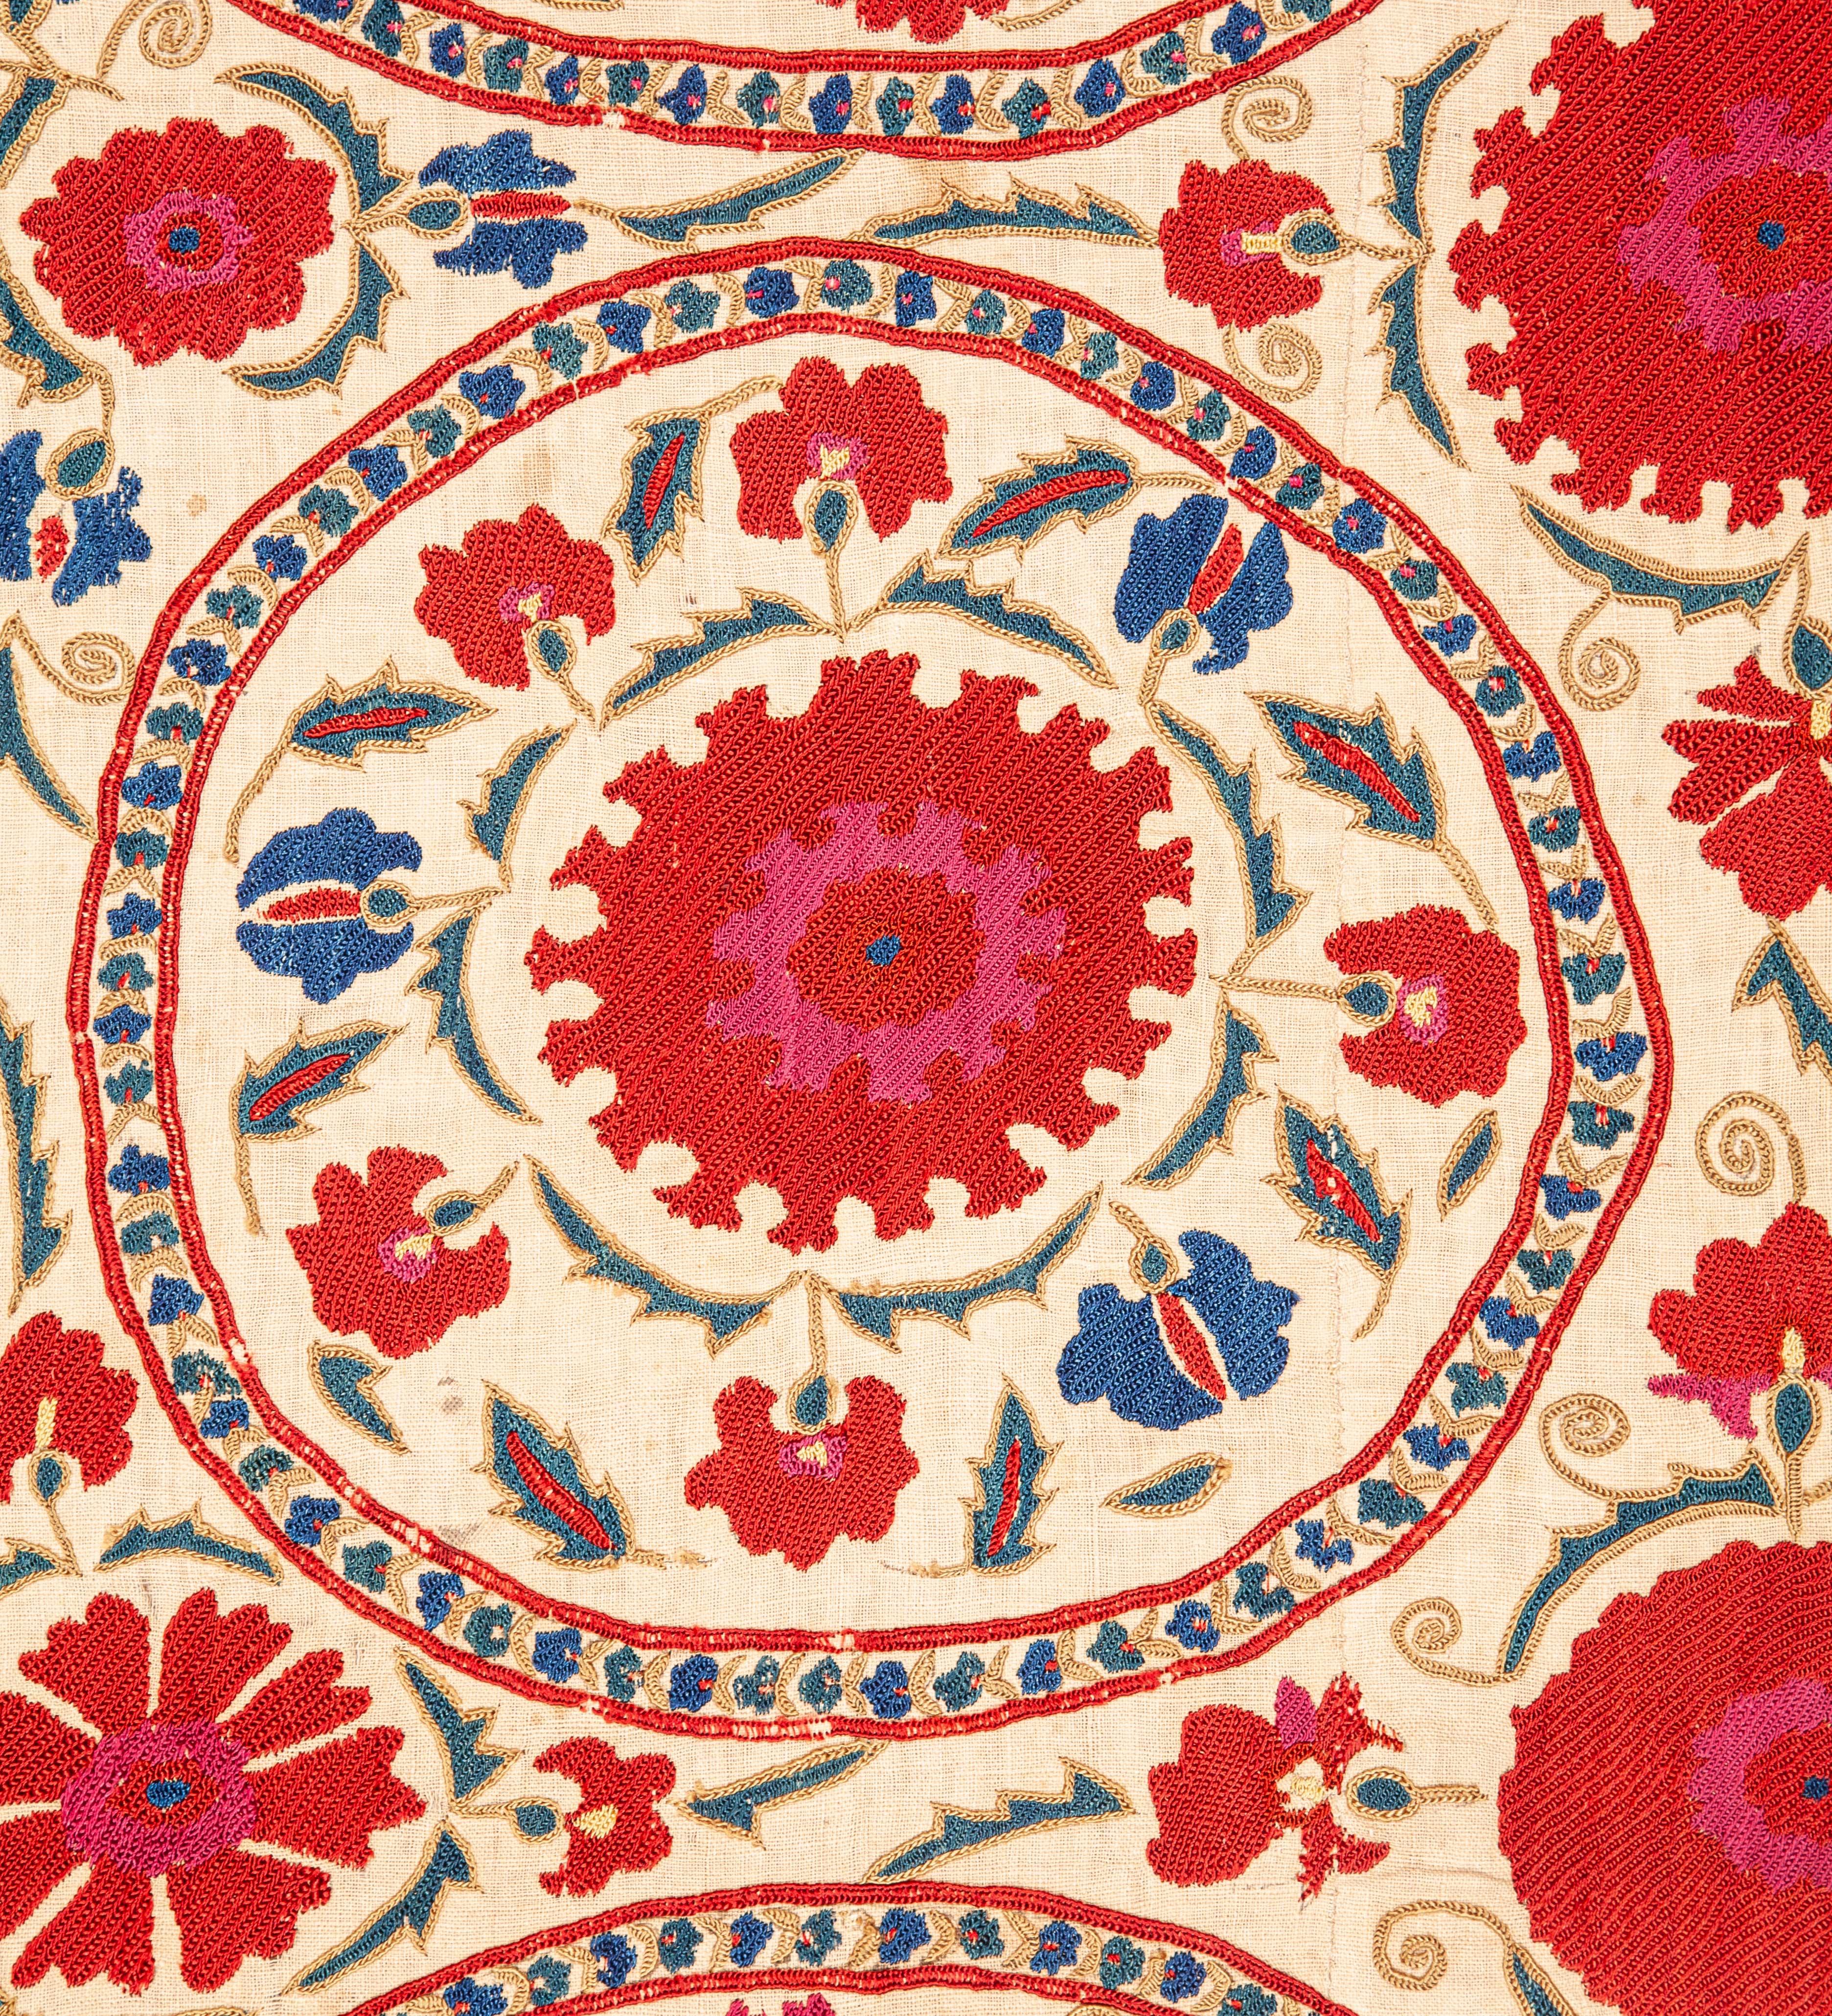 Hand-Woven Antique Suzani from Bukhara Uzbekistan, 19th Century